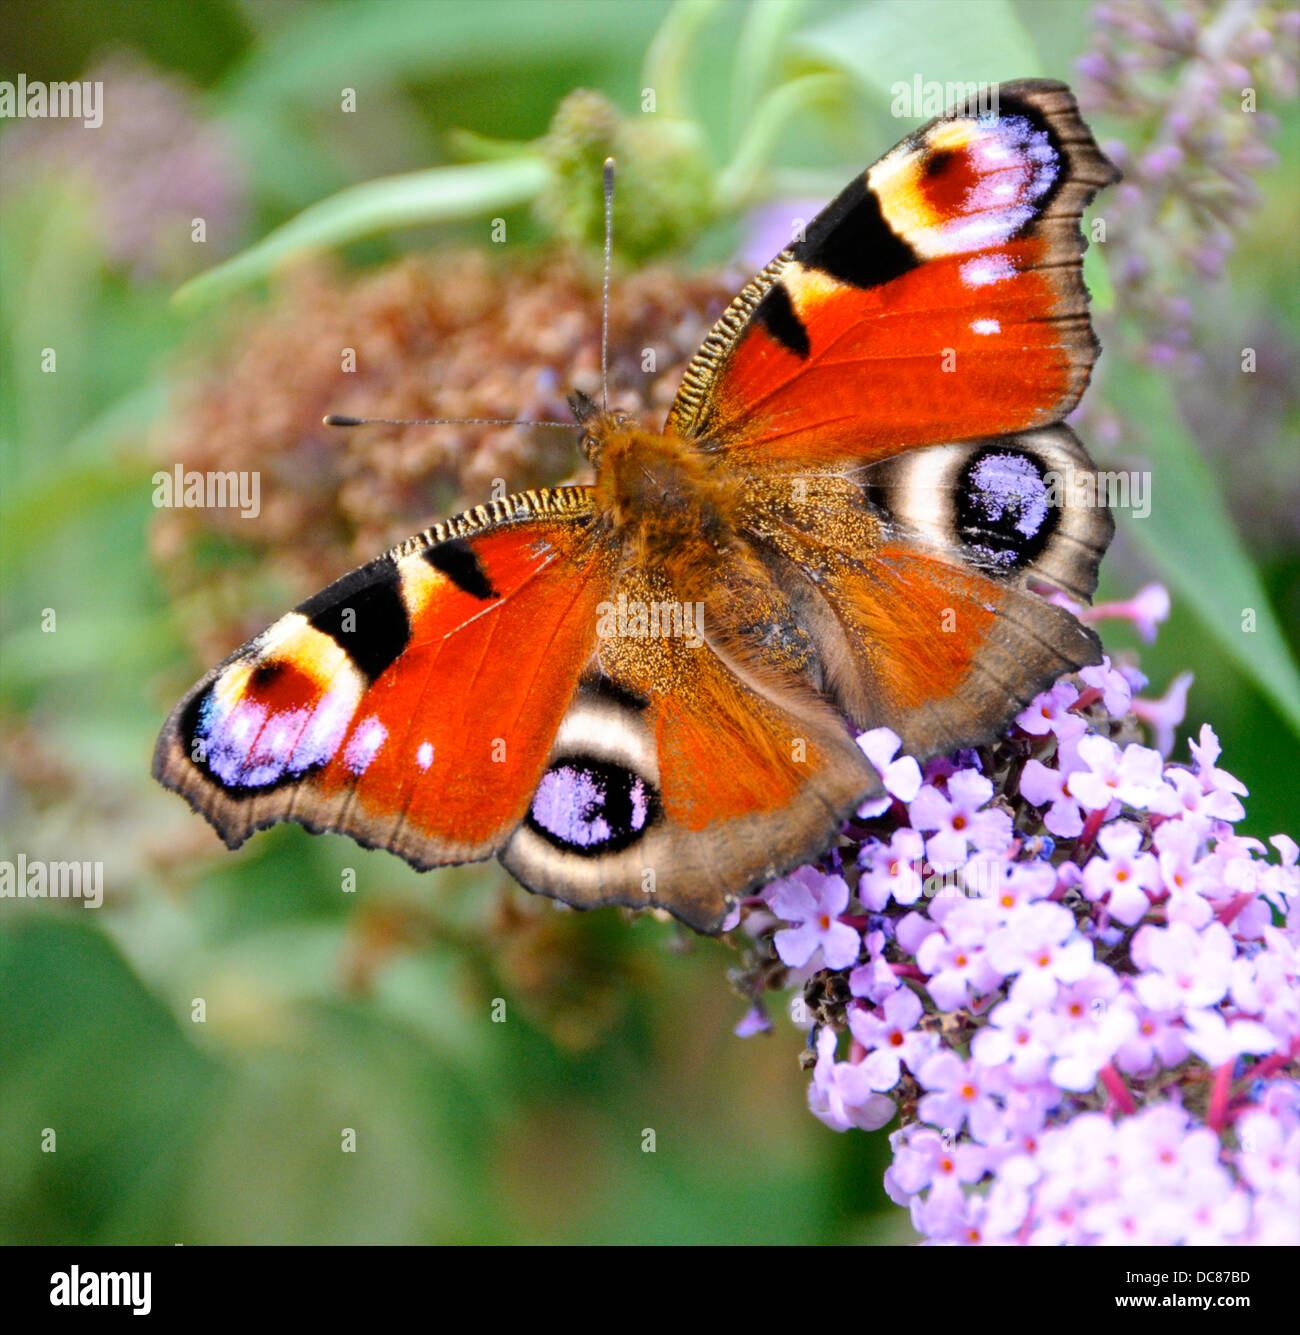 Europeo mariposa pavo real (Inachis io) Foto de stock